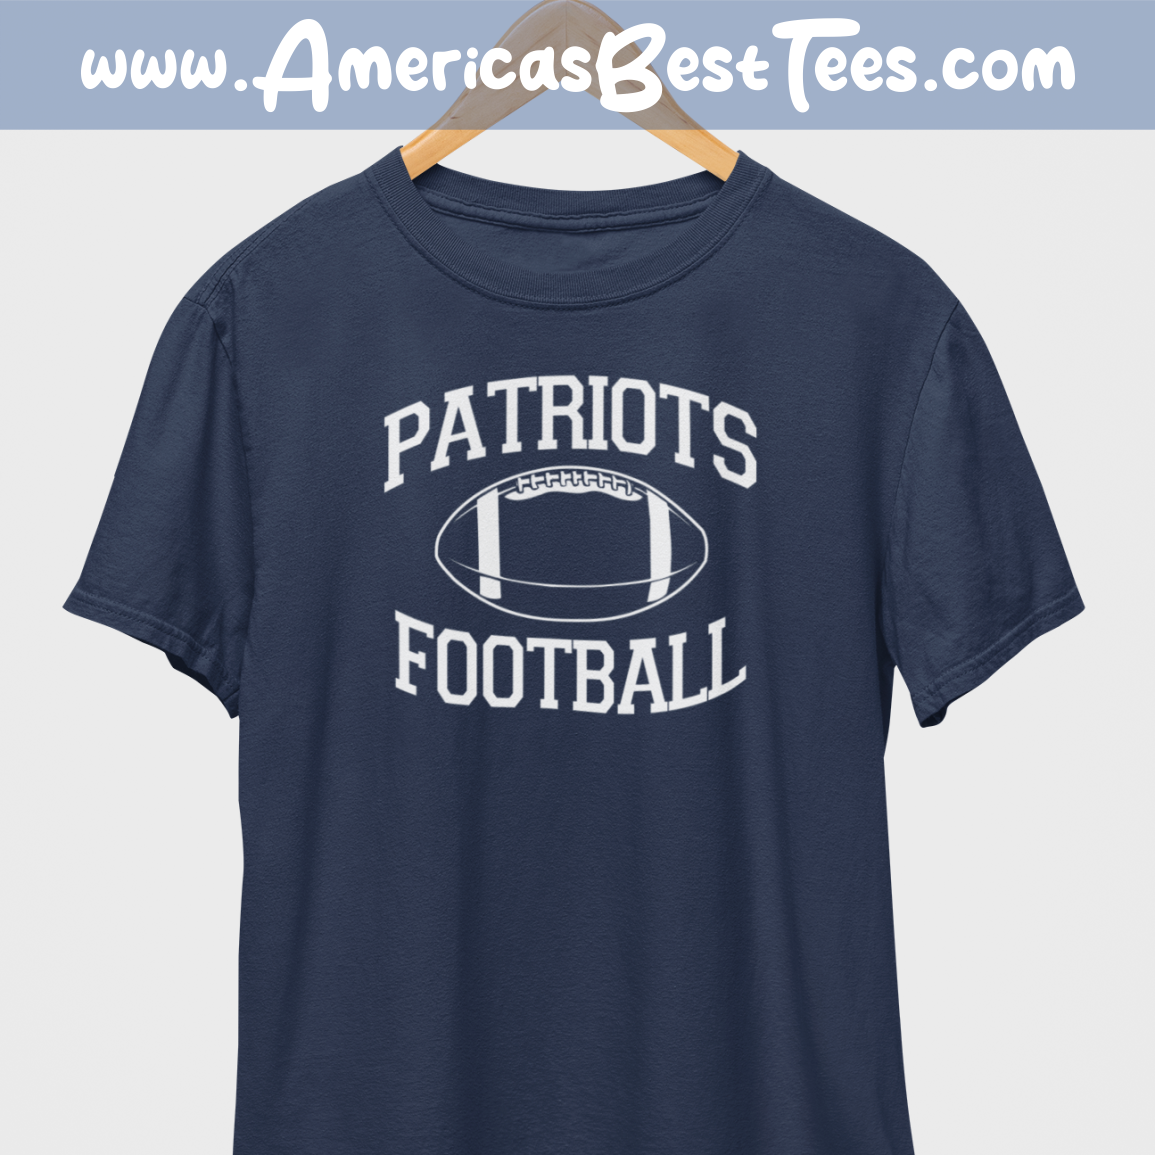 Patriots Football White Print T-Shirt